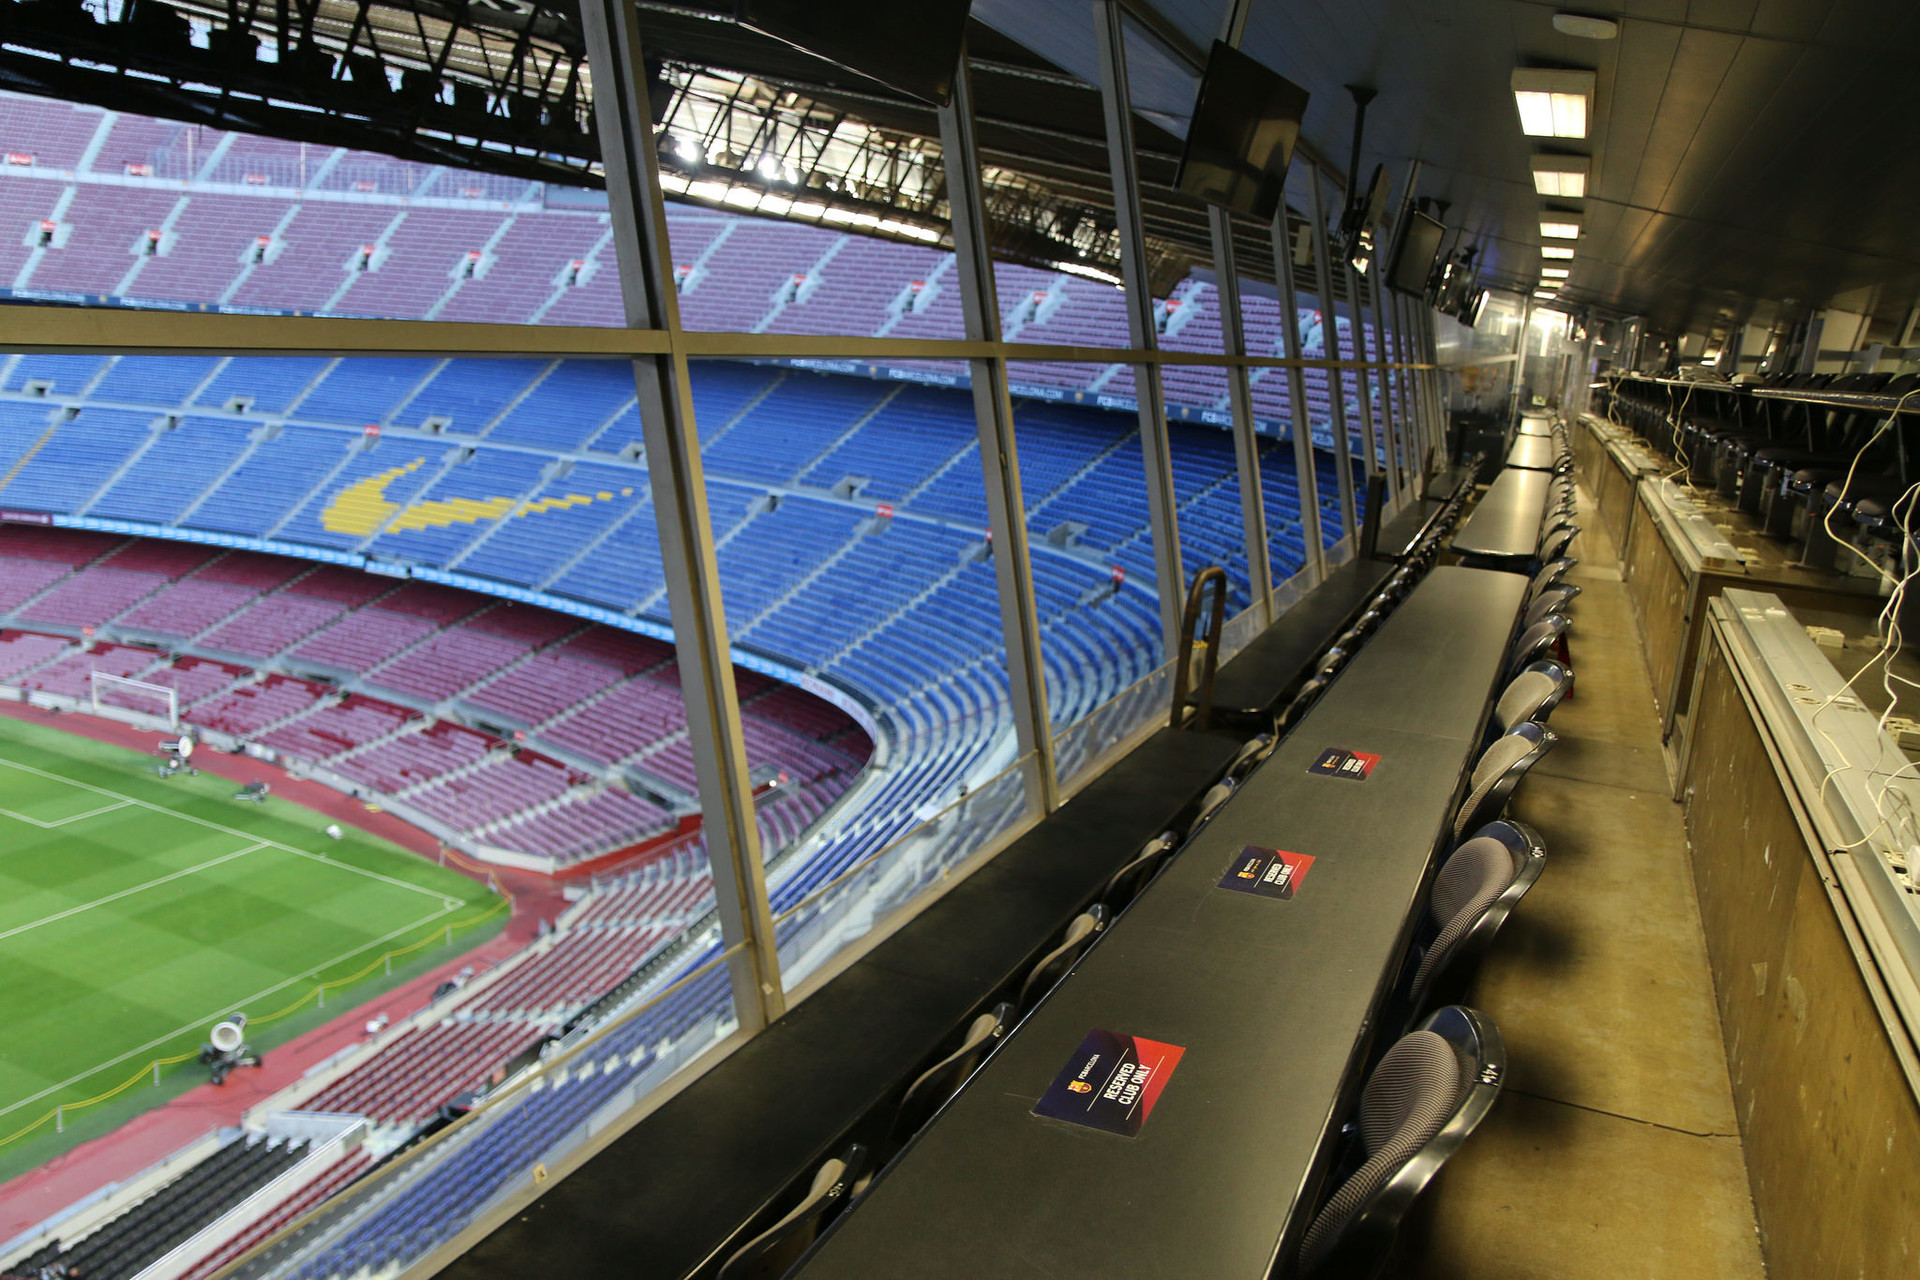 Camp Nou - My dream has come true